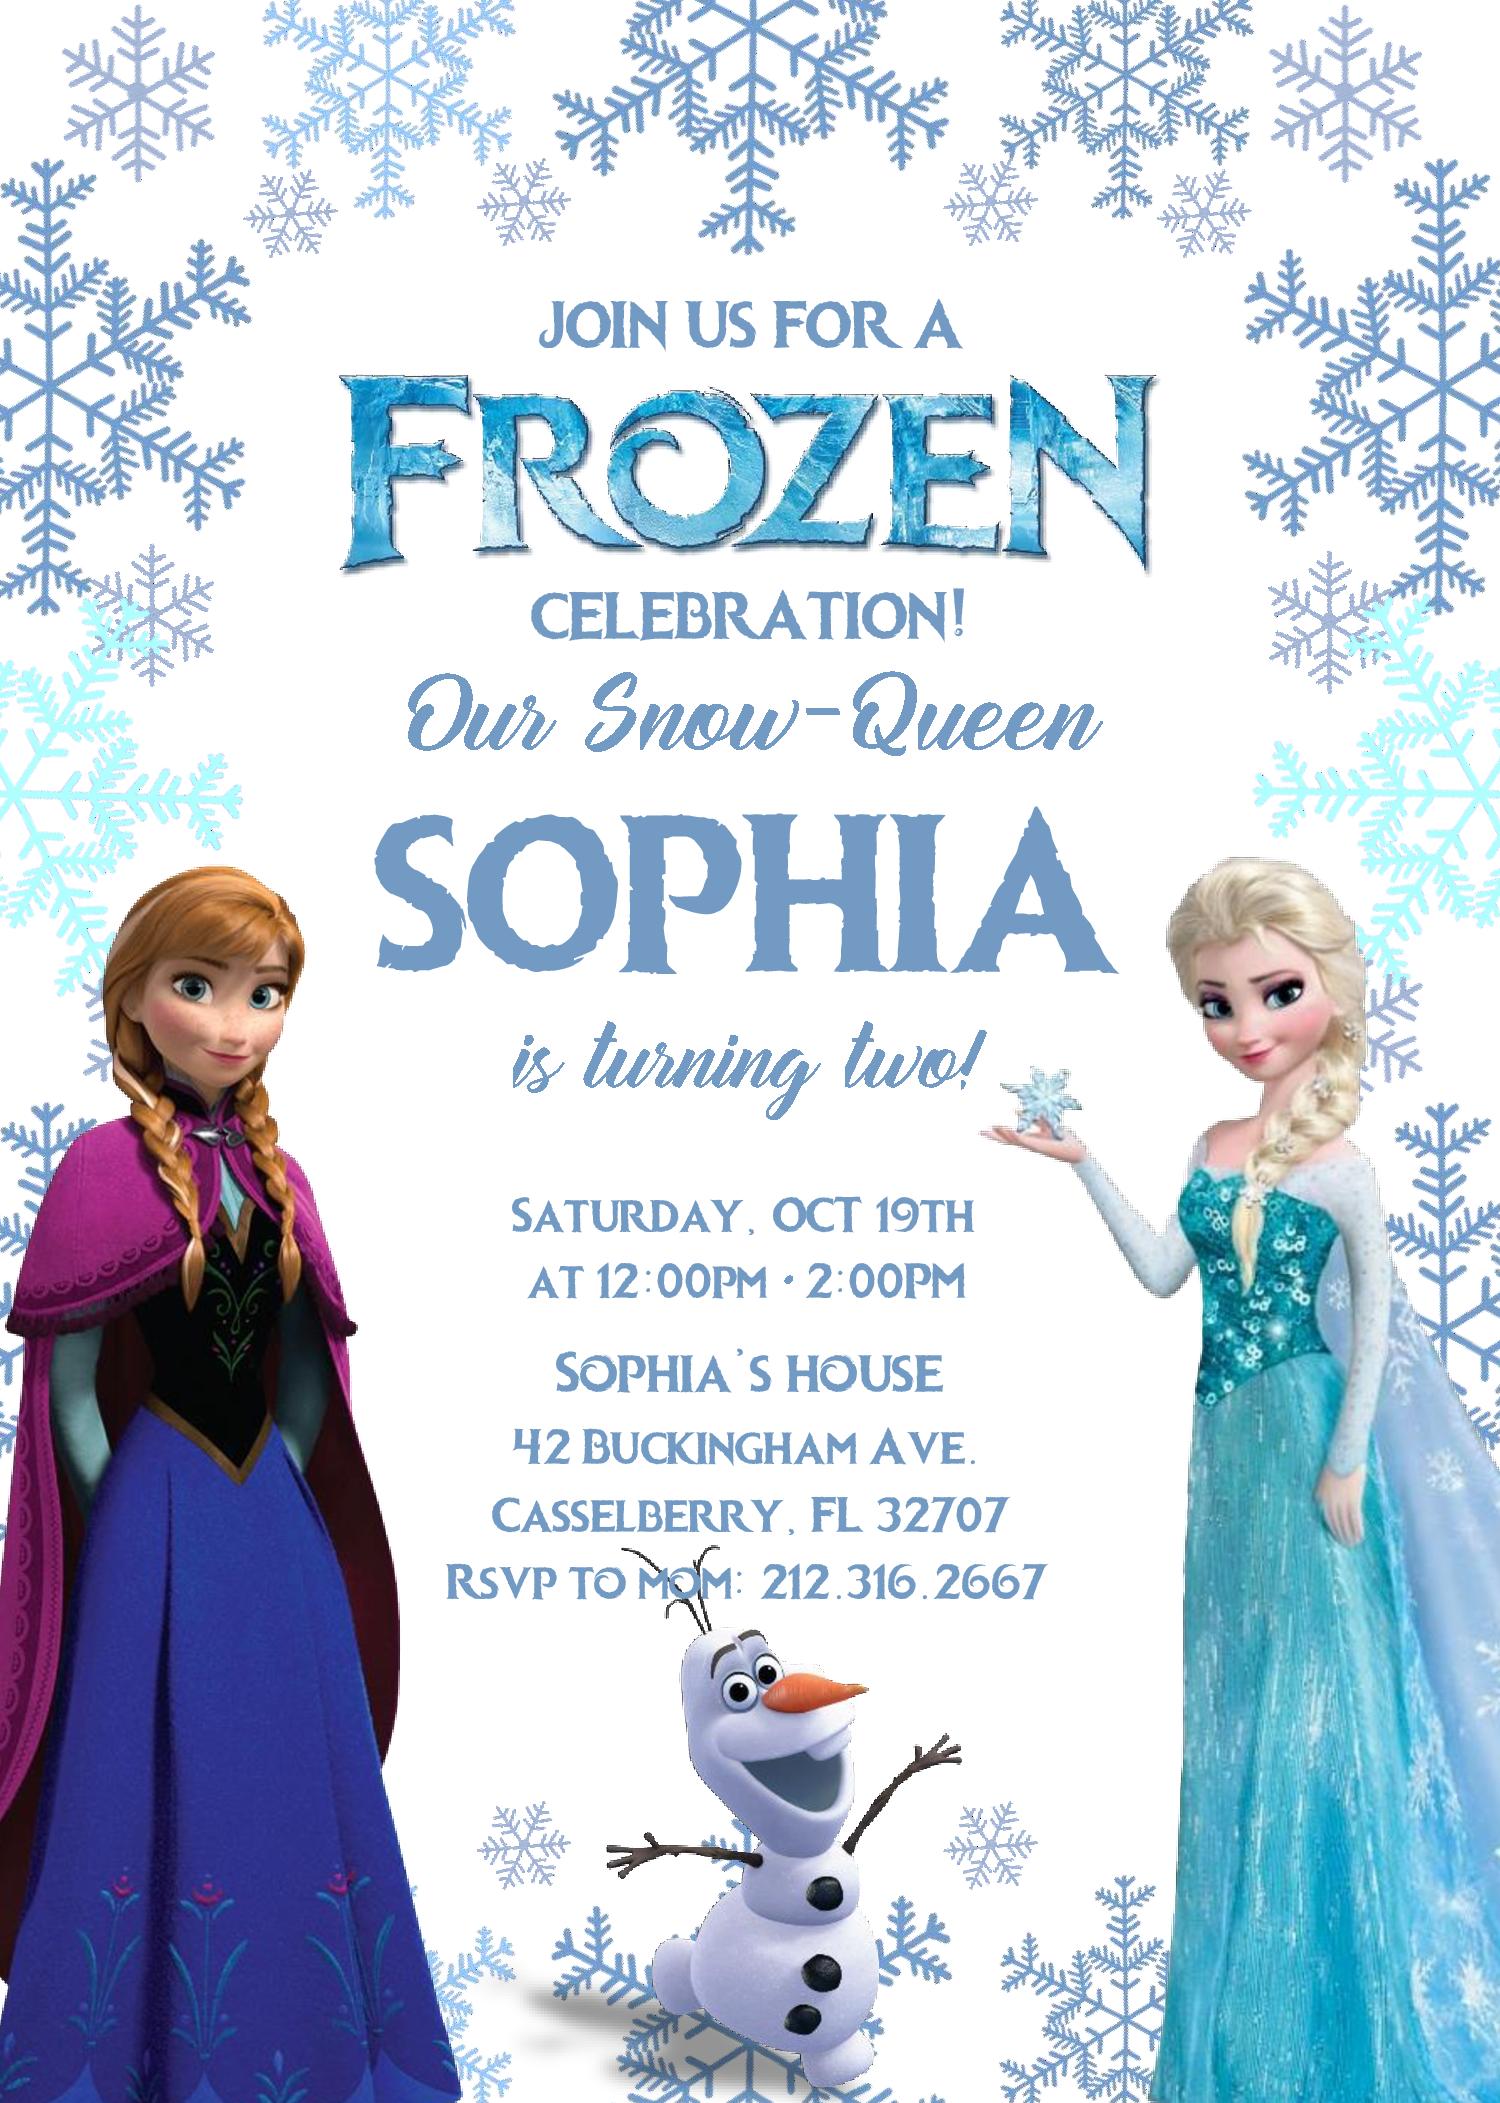 Invitations Announcements Paper Party Supplies Frozen Chalkboard Invitation Frozen Birthday 